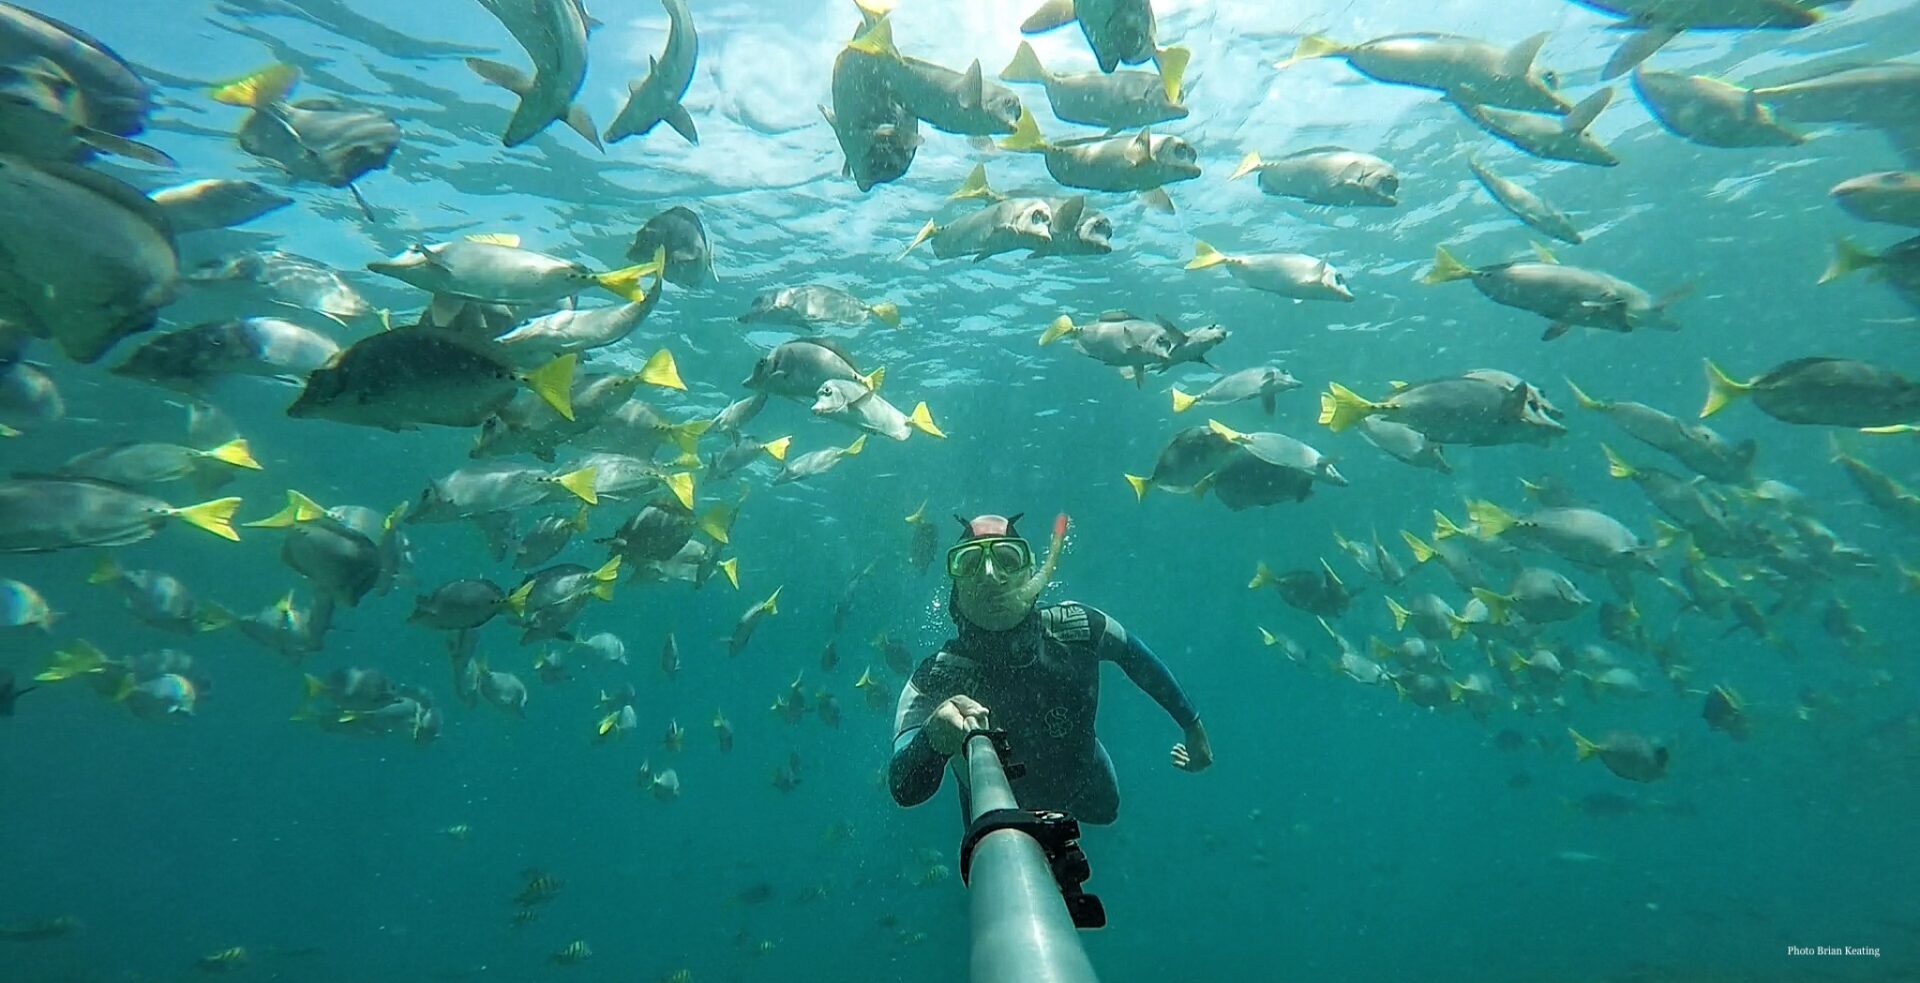 6) Galapagos snorkeling 2016